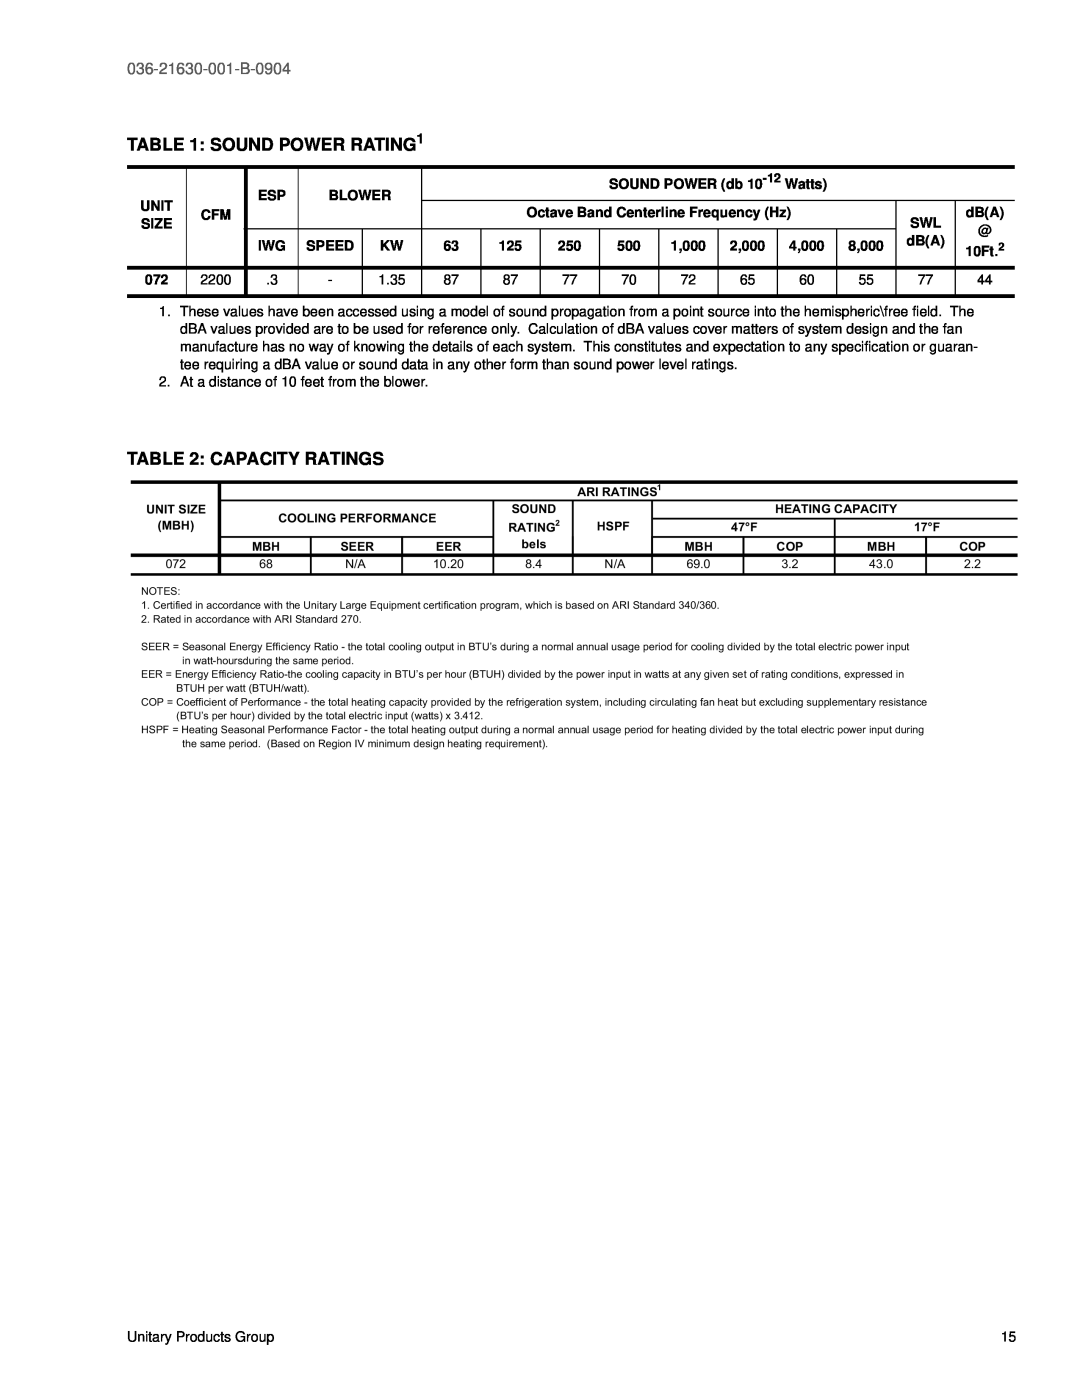 York BP 072 warranty SOUND POWER RATING1, Capacity Ratings, 036-21630-001-B-0904 